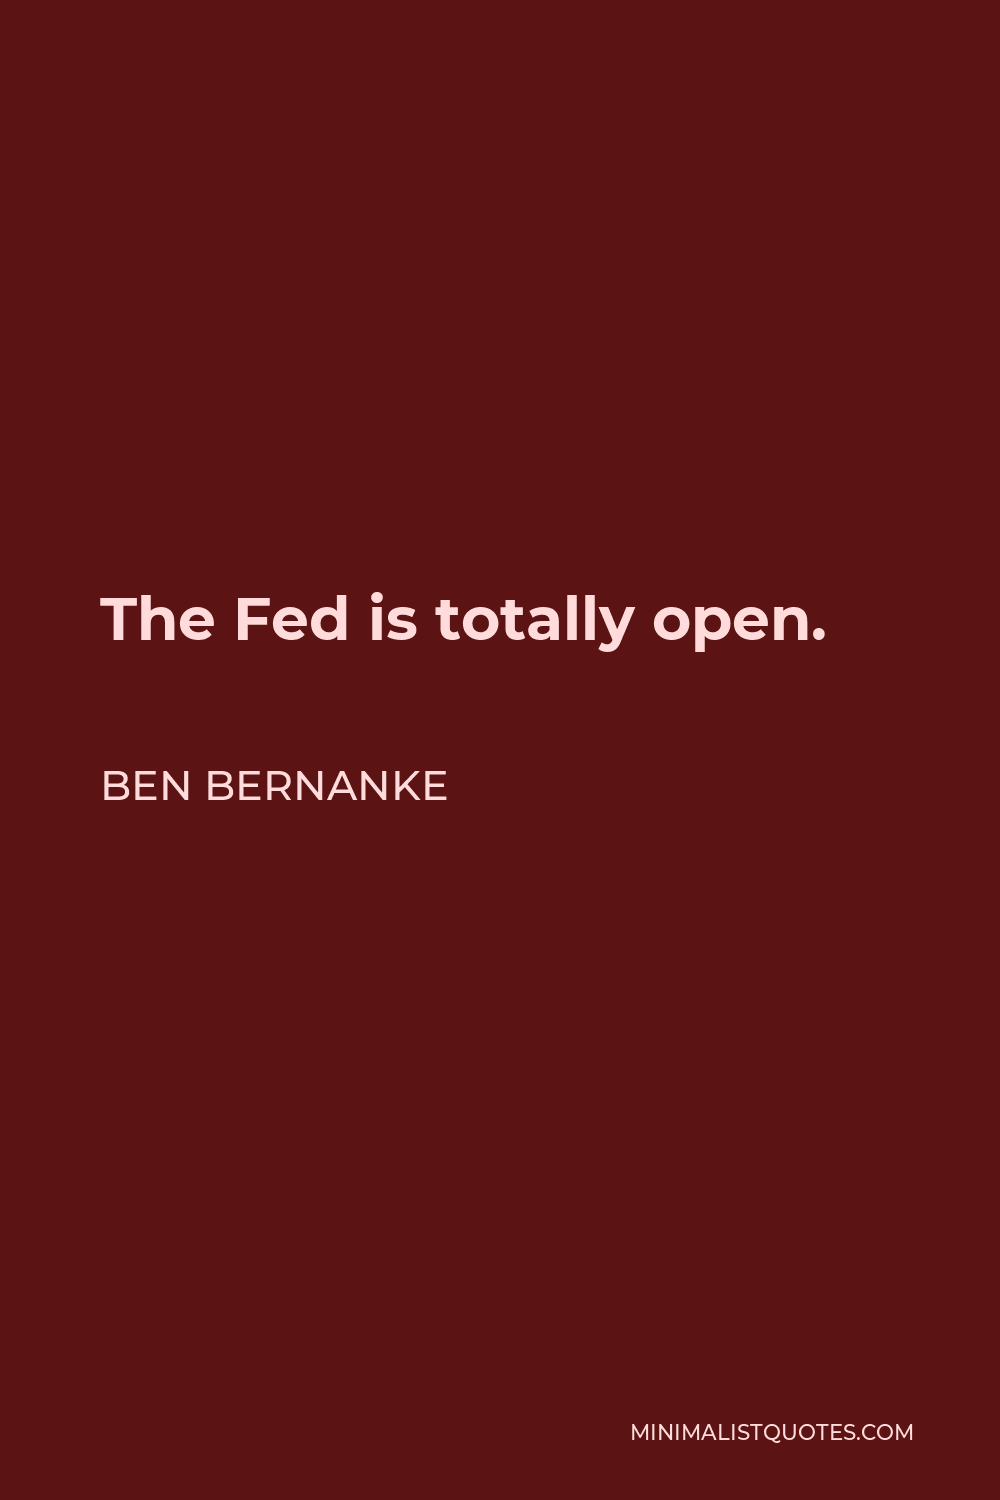 Ben Bernanke Quote - The Fed is totally open.